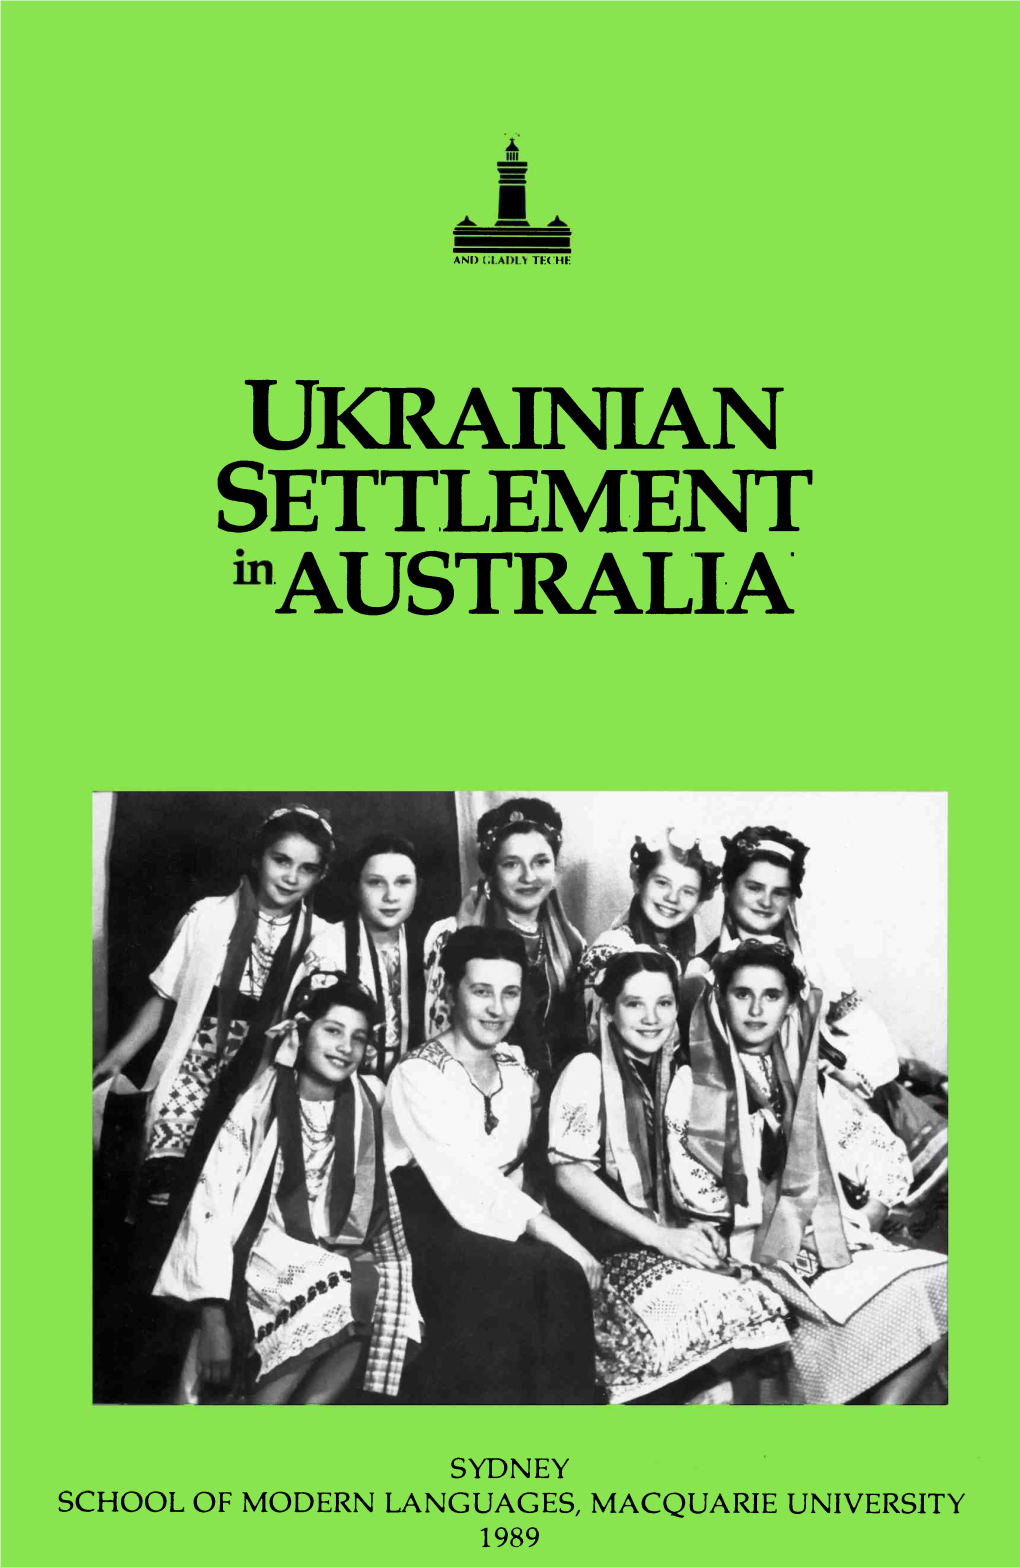 UKRAINIAN SETTLEMENT in AUSTRALIA